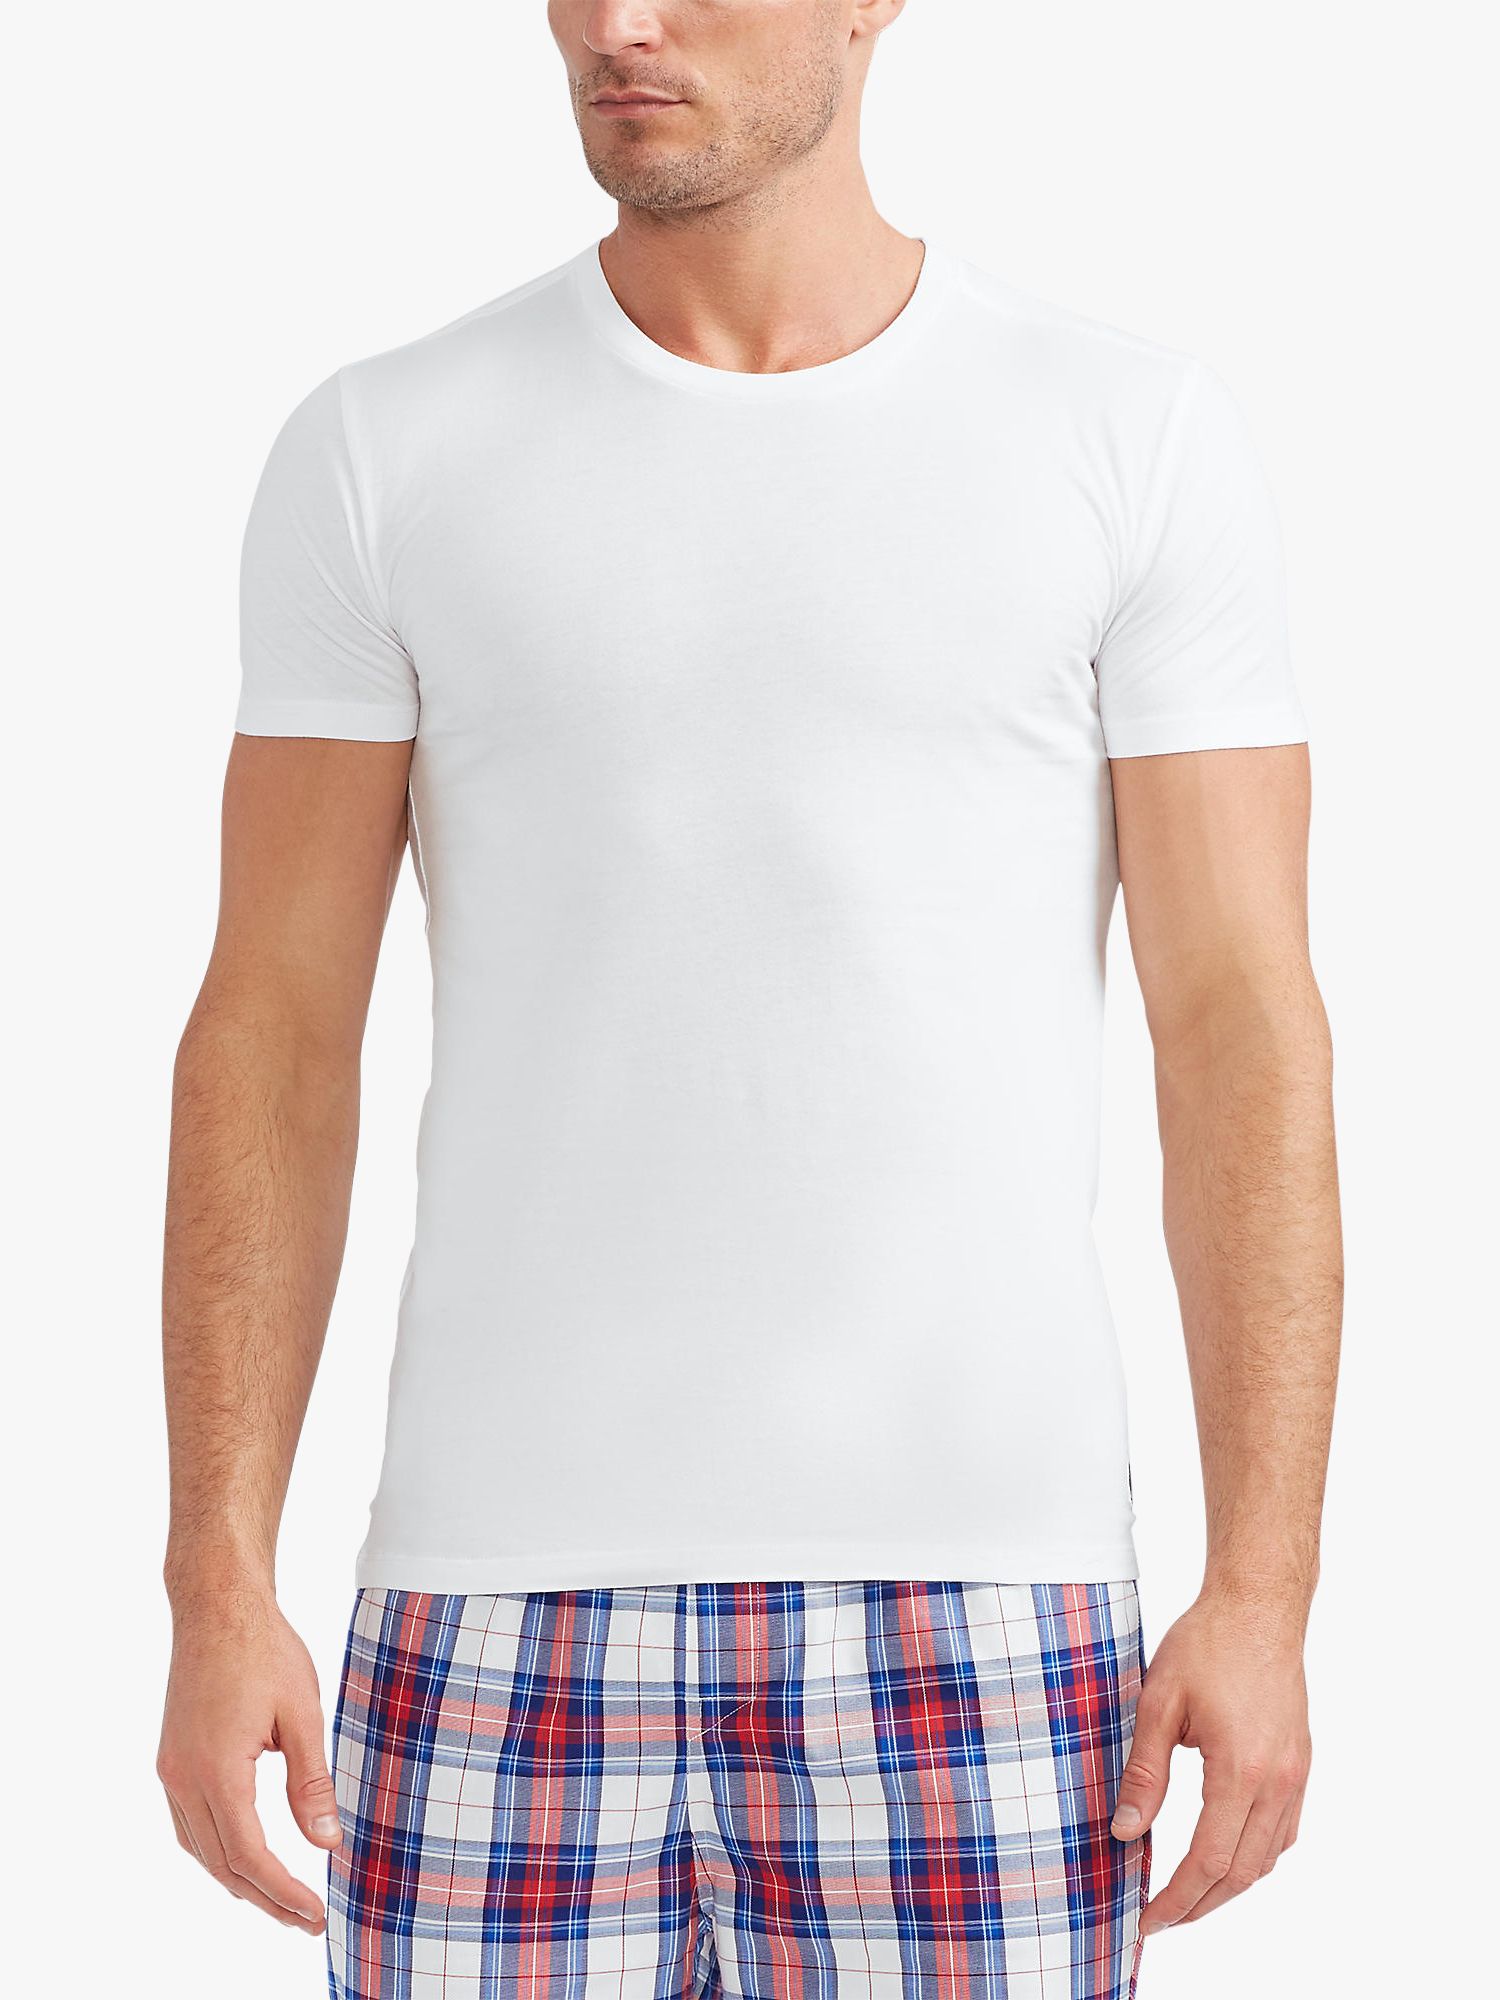 Polo Ralph Lauren Cotton Slim Crew Neck T-Shirt, Pack of 3, Multi at John Lewis Partners